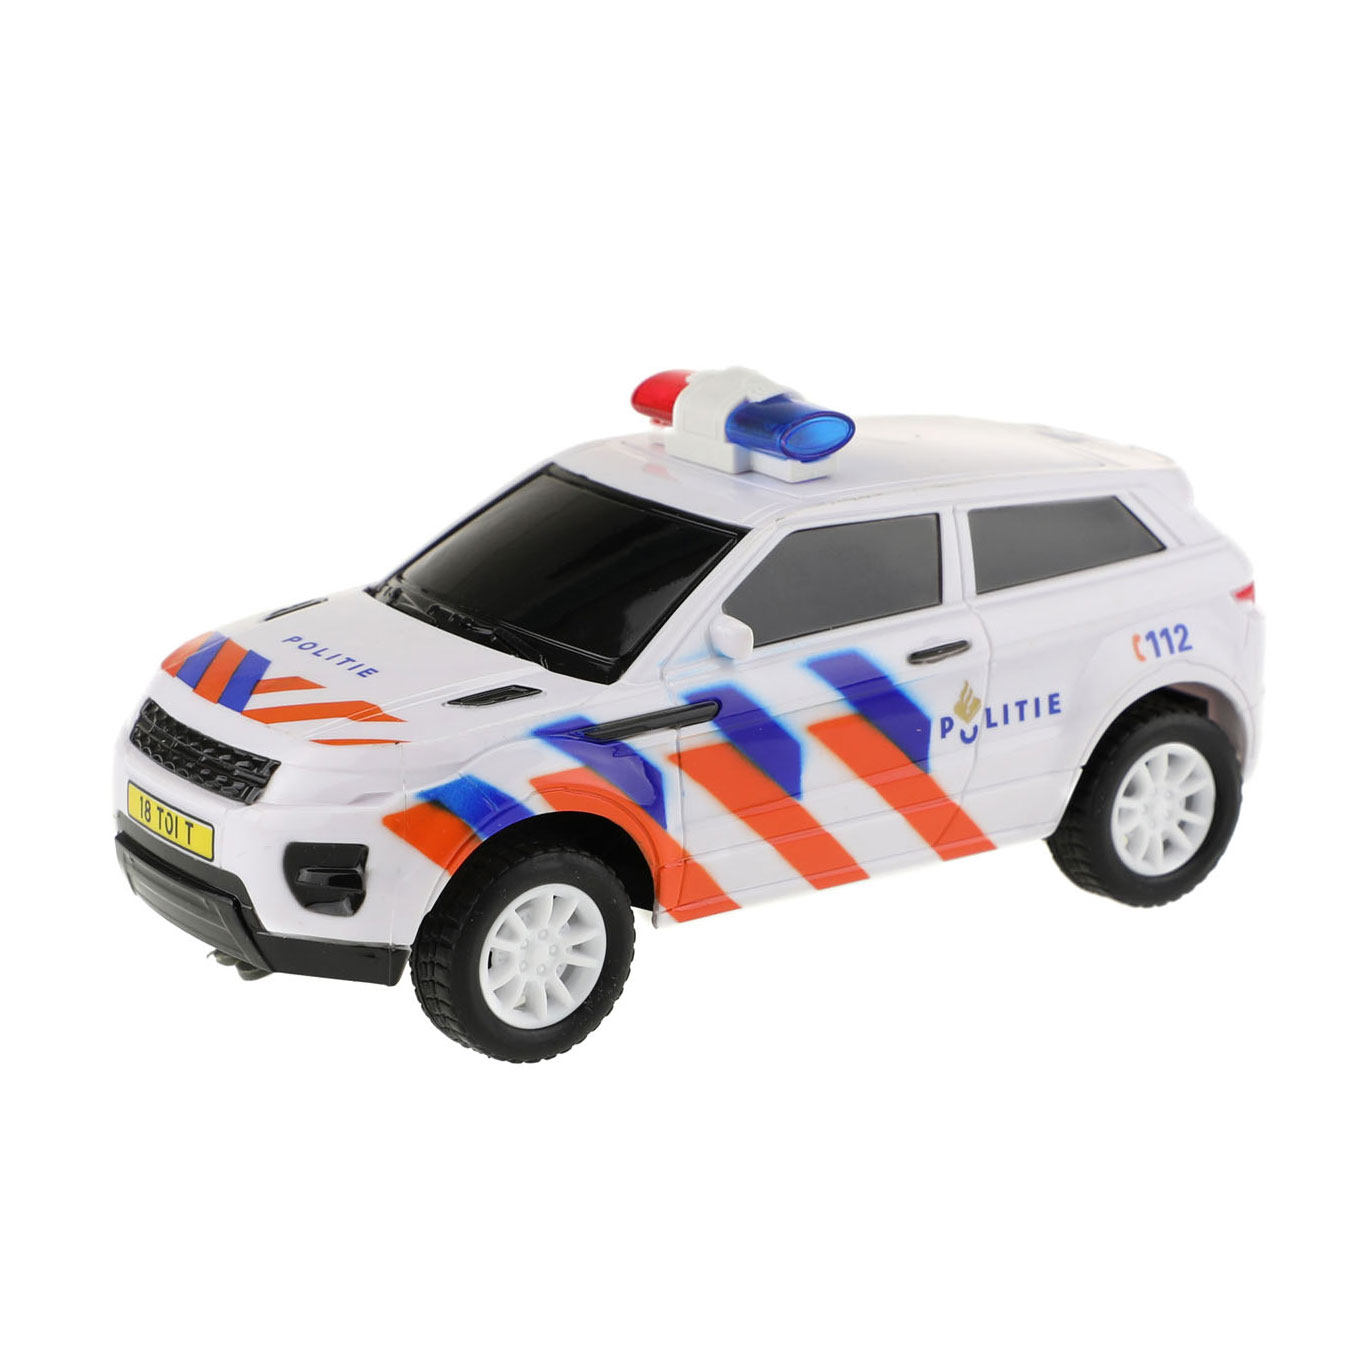 Verrassend genoeg Bekijk het internet Vrijgevigheid RC Police car, 16cm | Thimble Toys